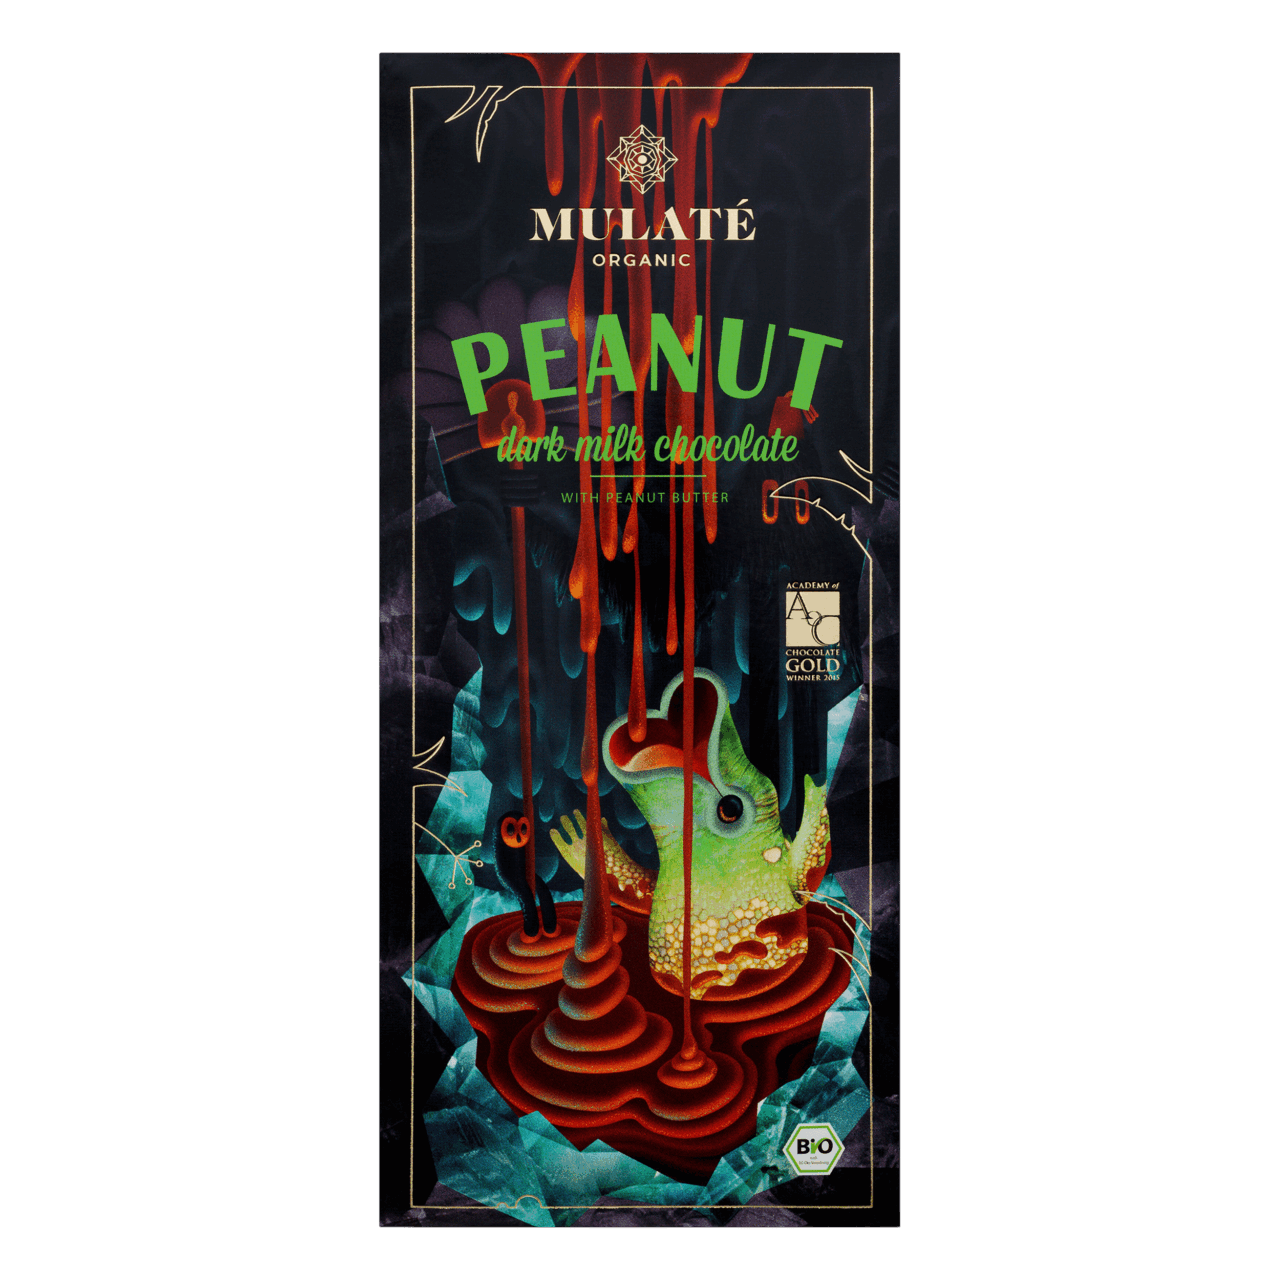 Mulate Peanut Chocolate